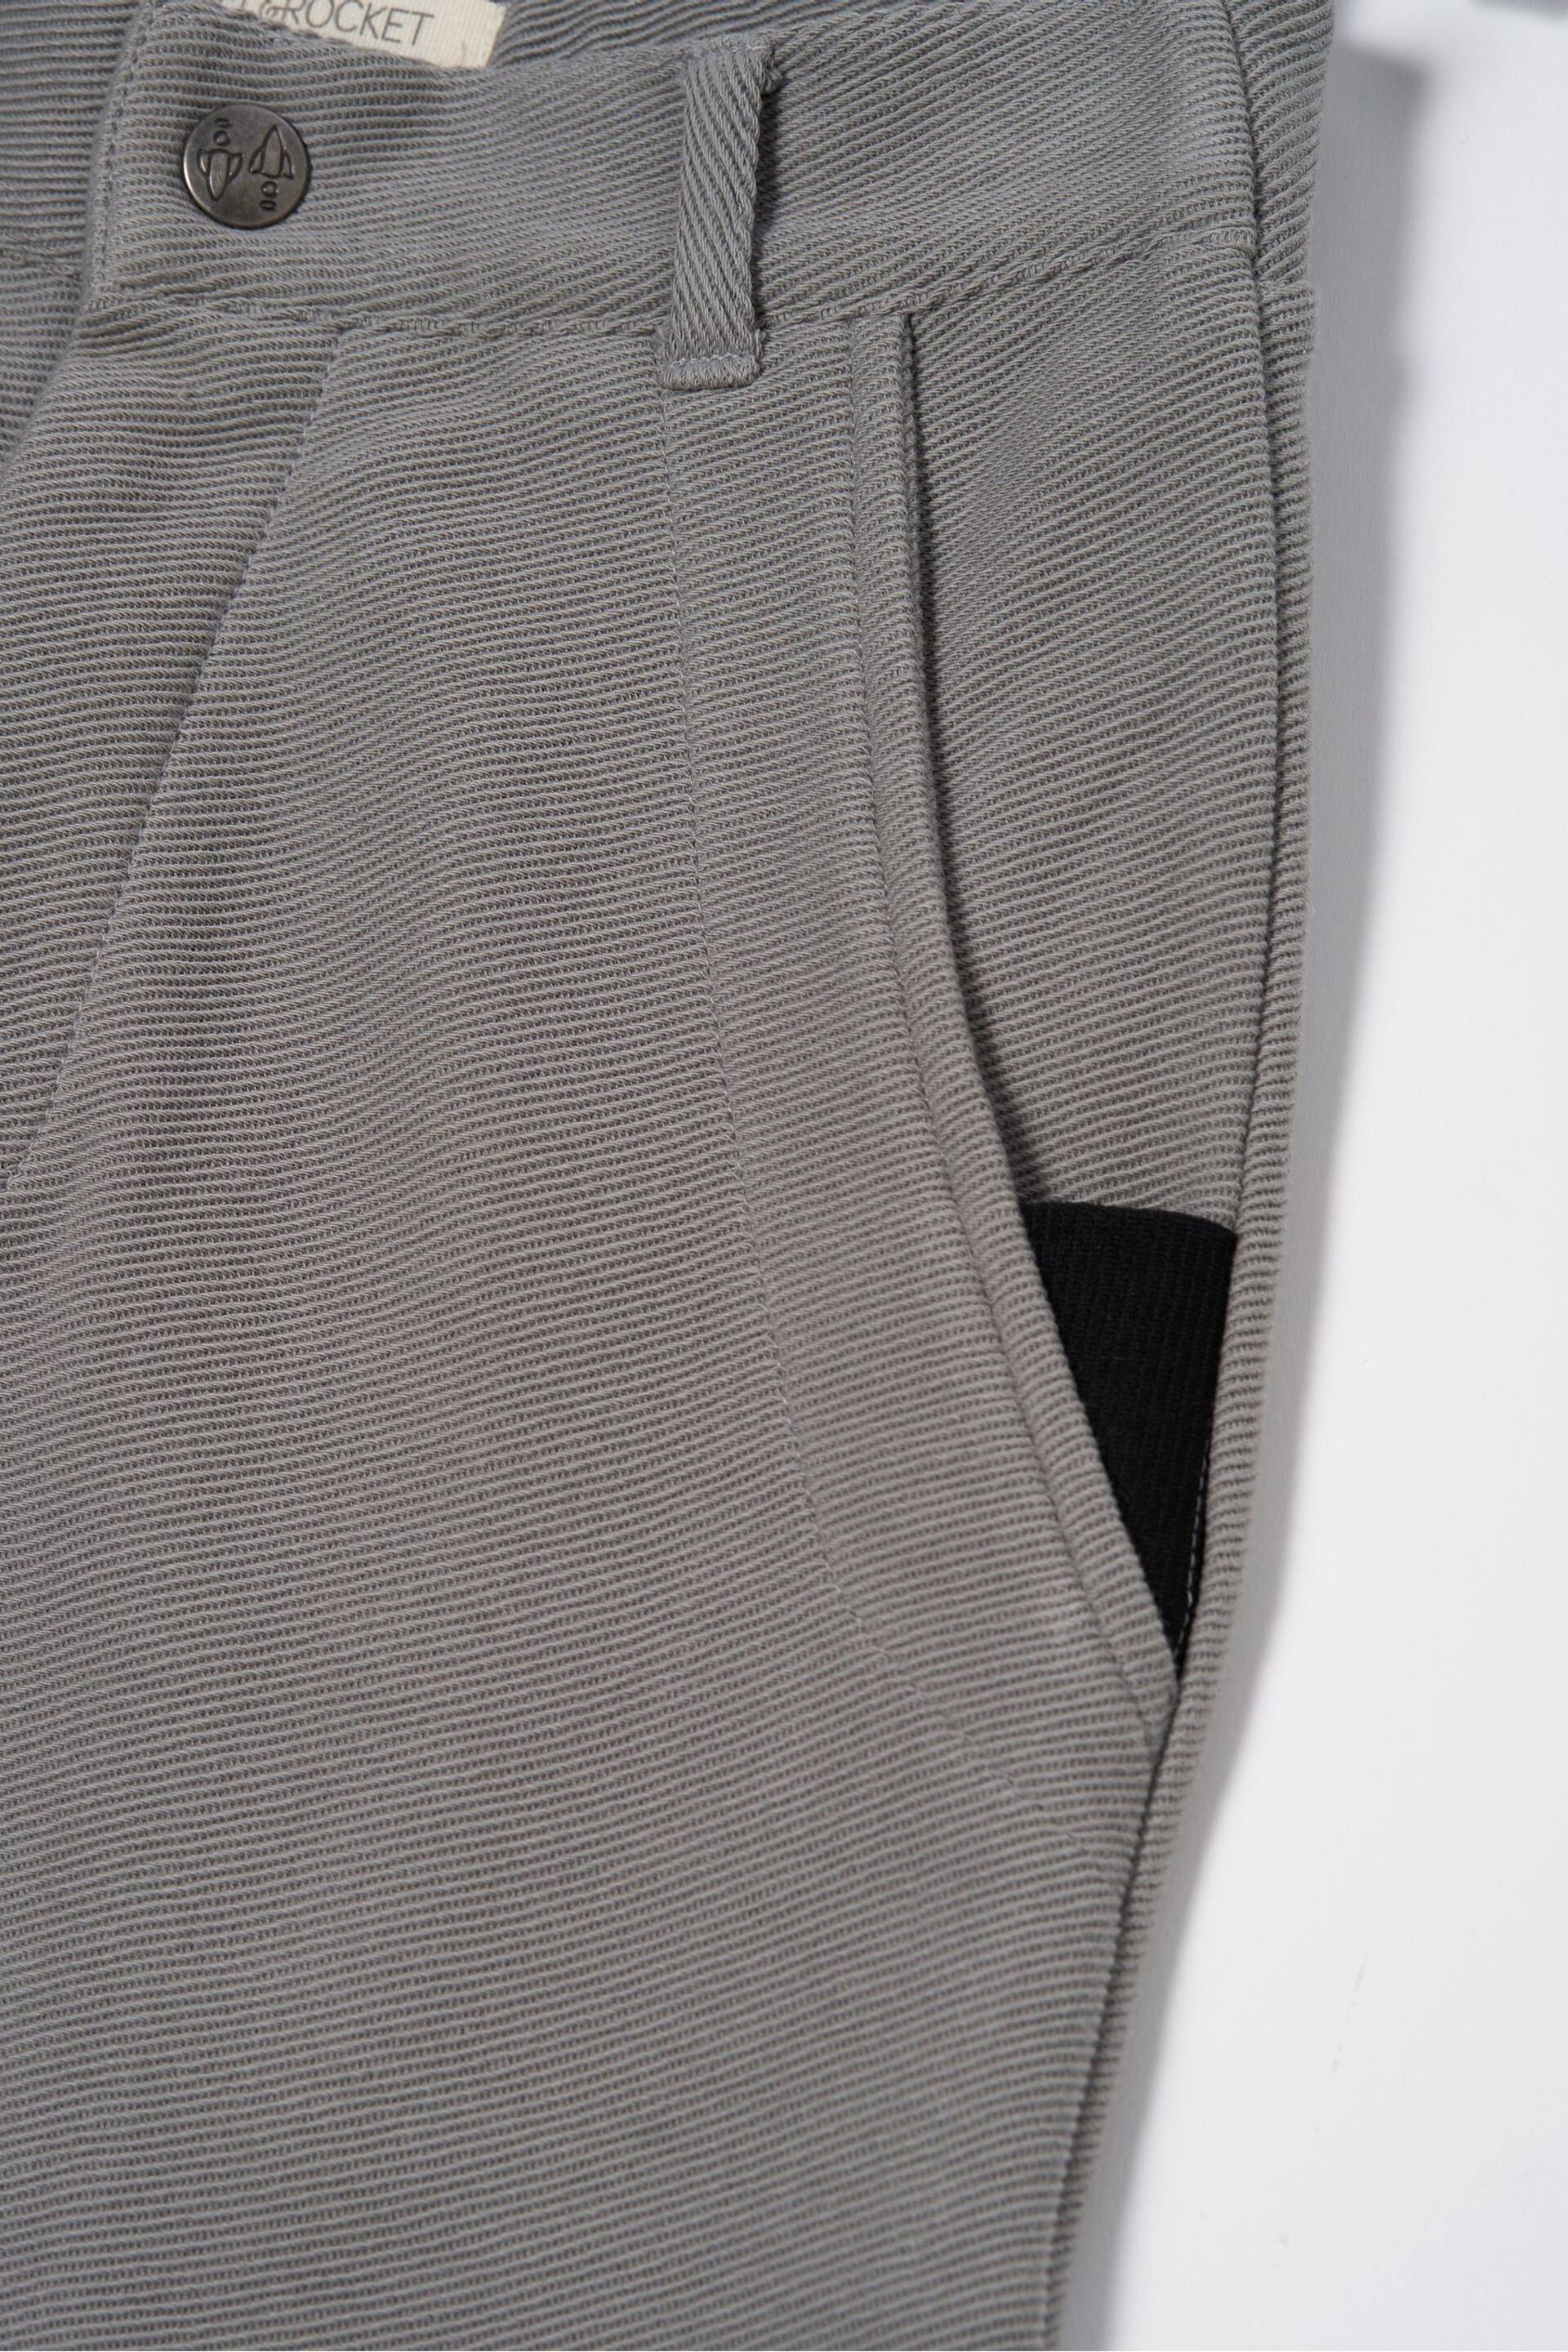 Angel & Rocket Grey Benjamin Smart Jersey Trousers - Image 5 of 5